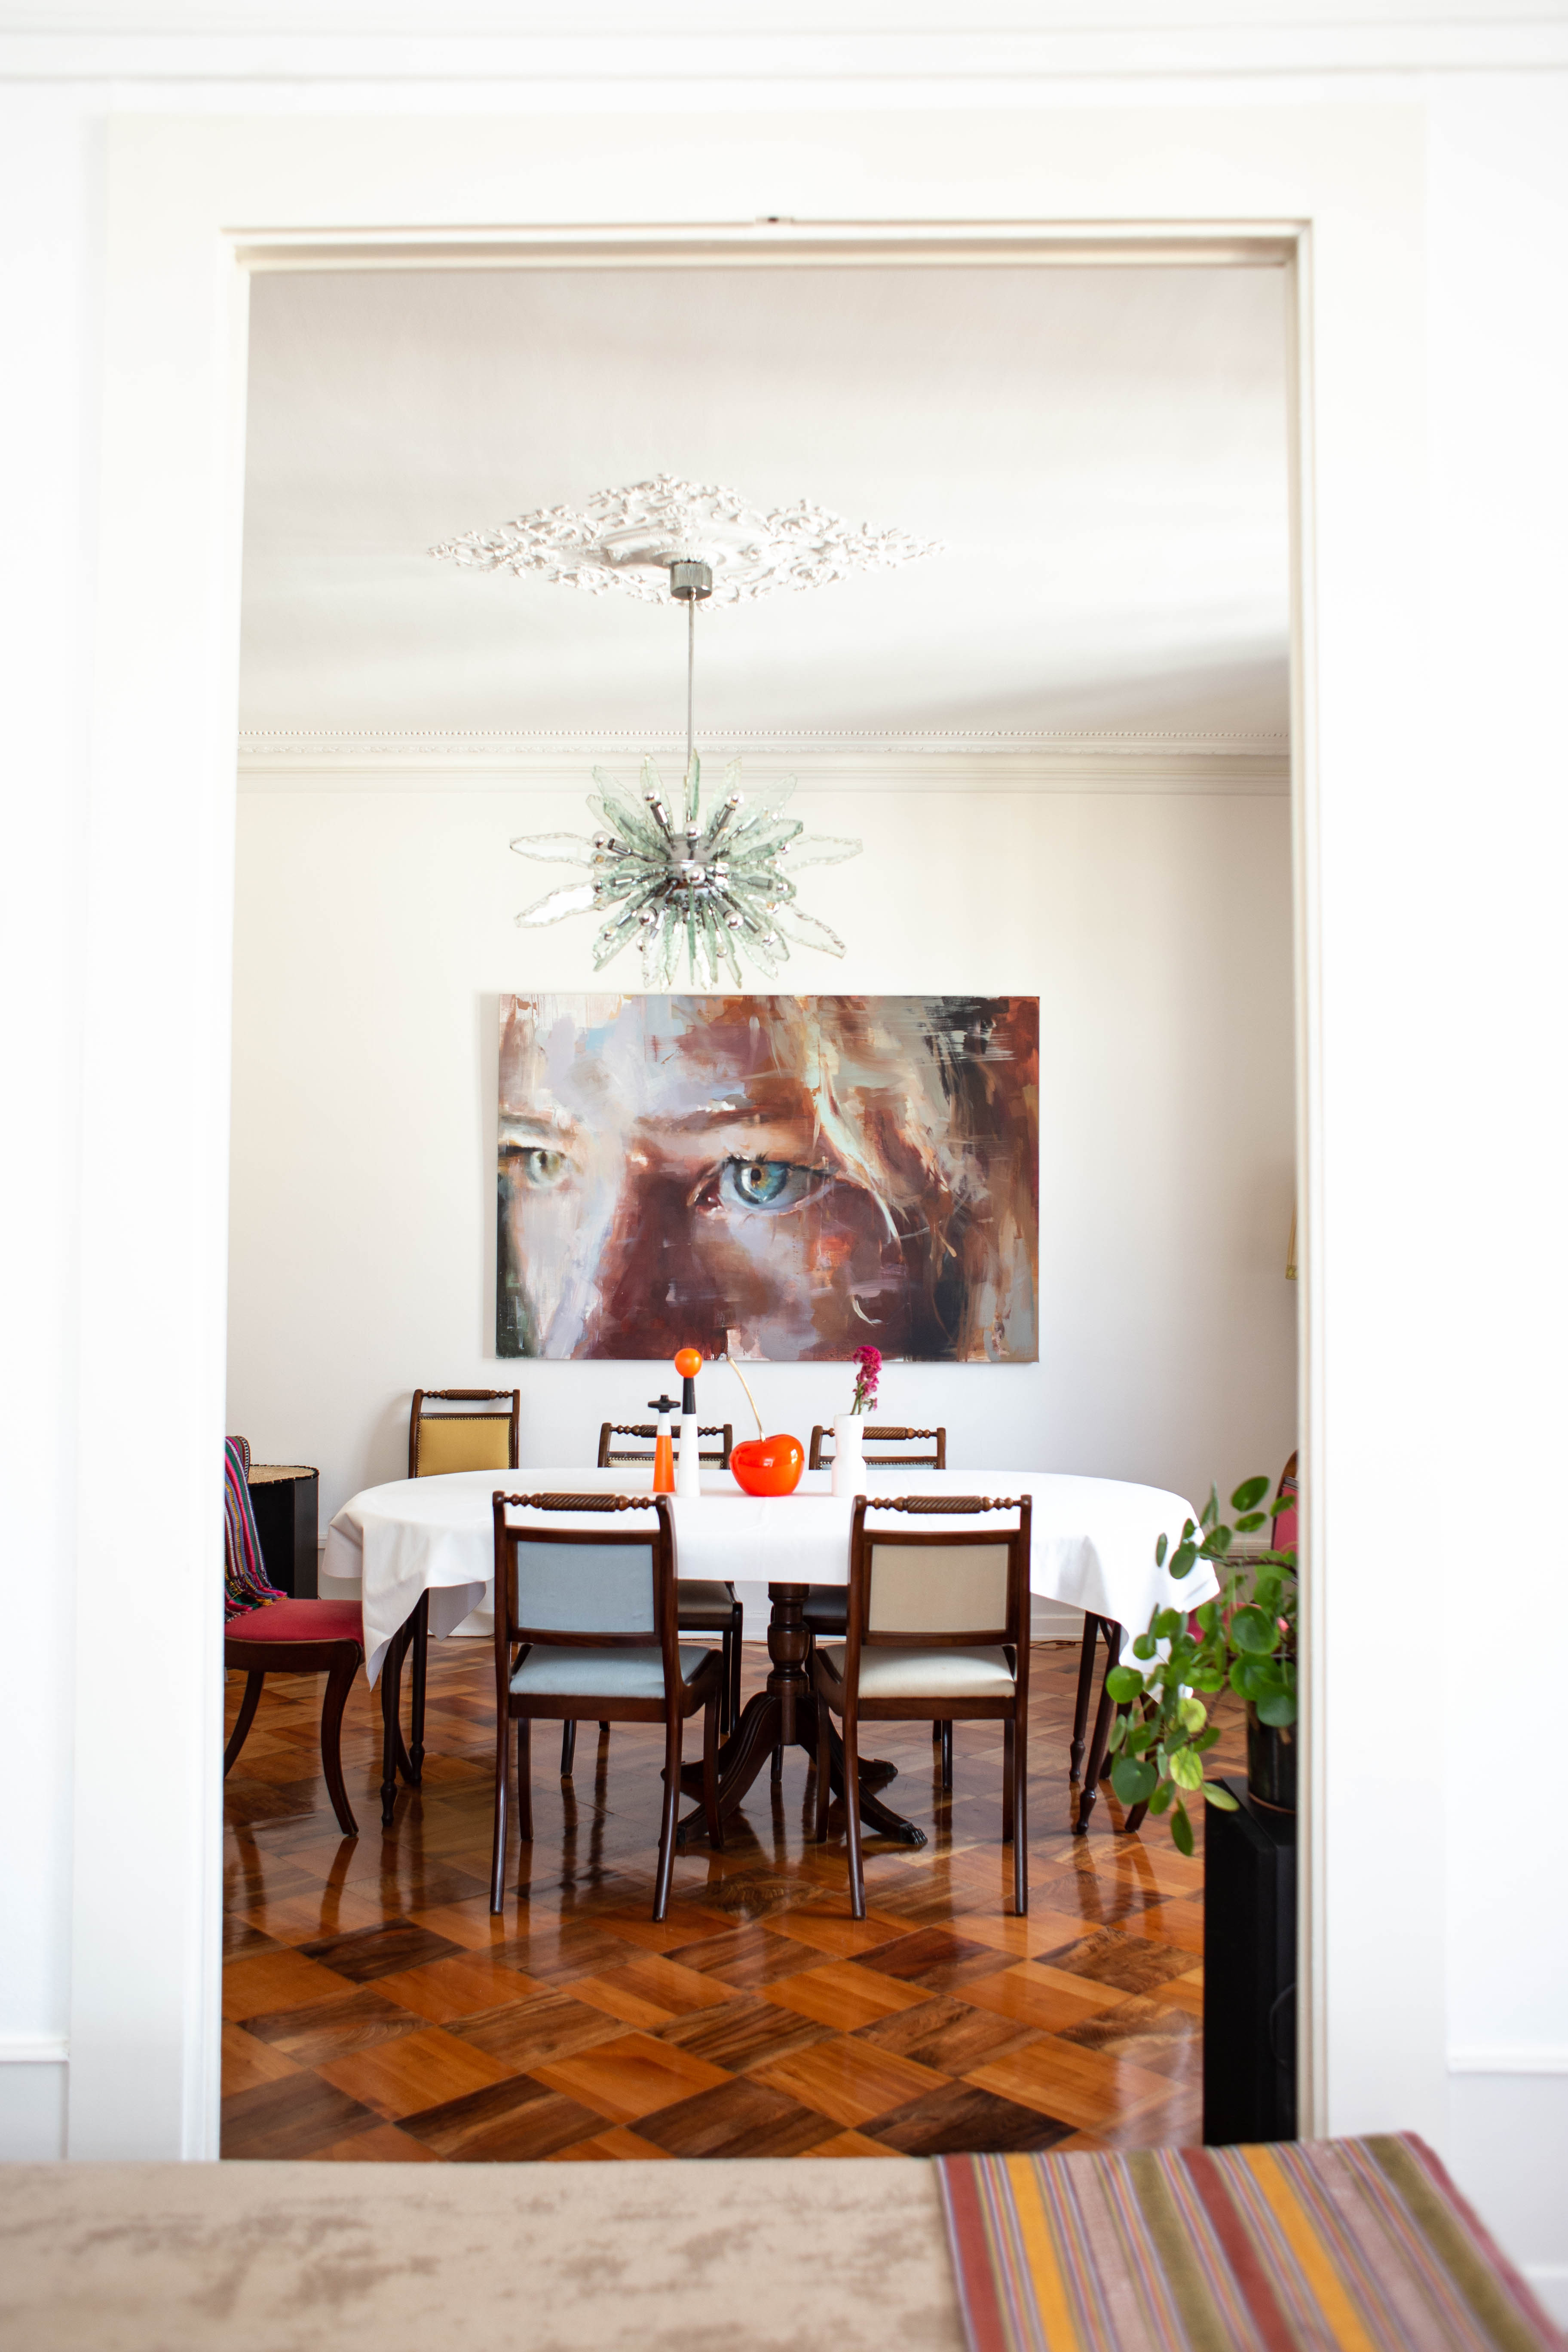 Anne Muhlethaler's dining room, the backdrop to her salon event, Le Trente